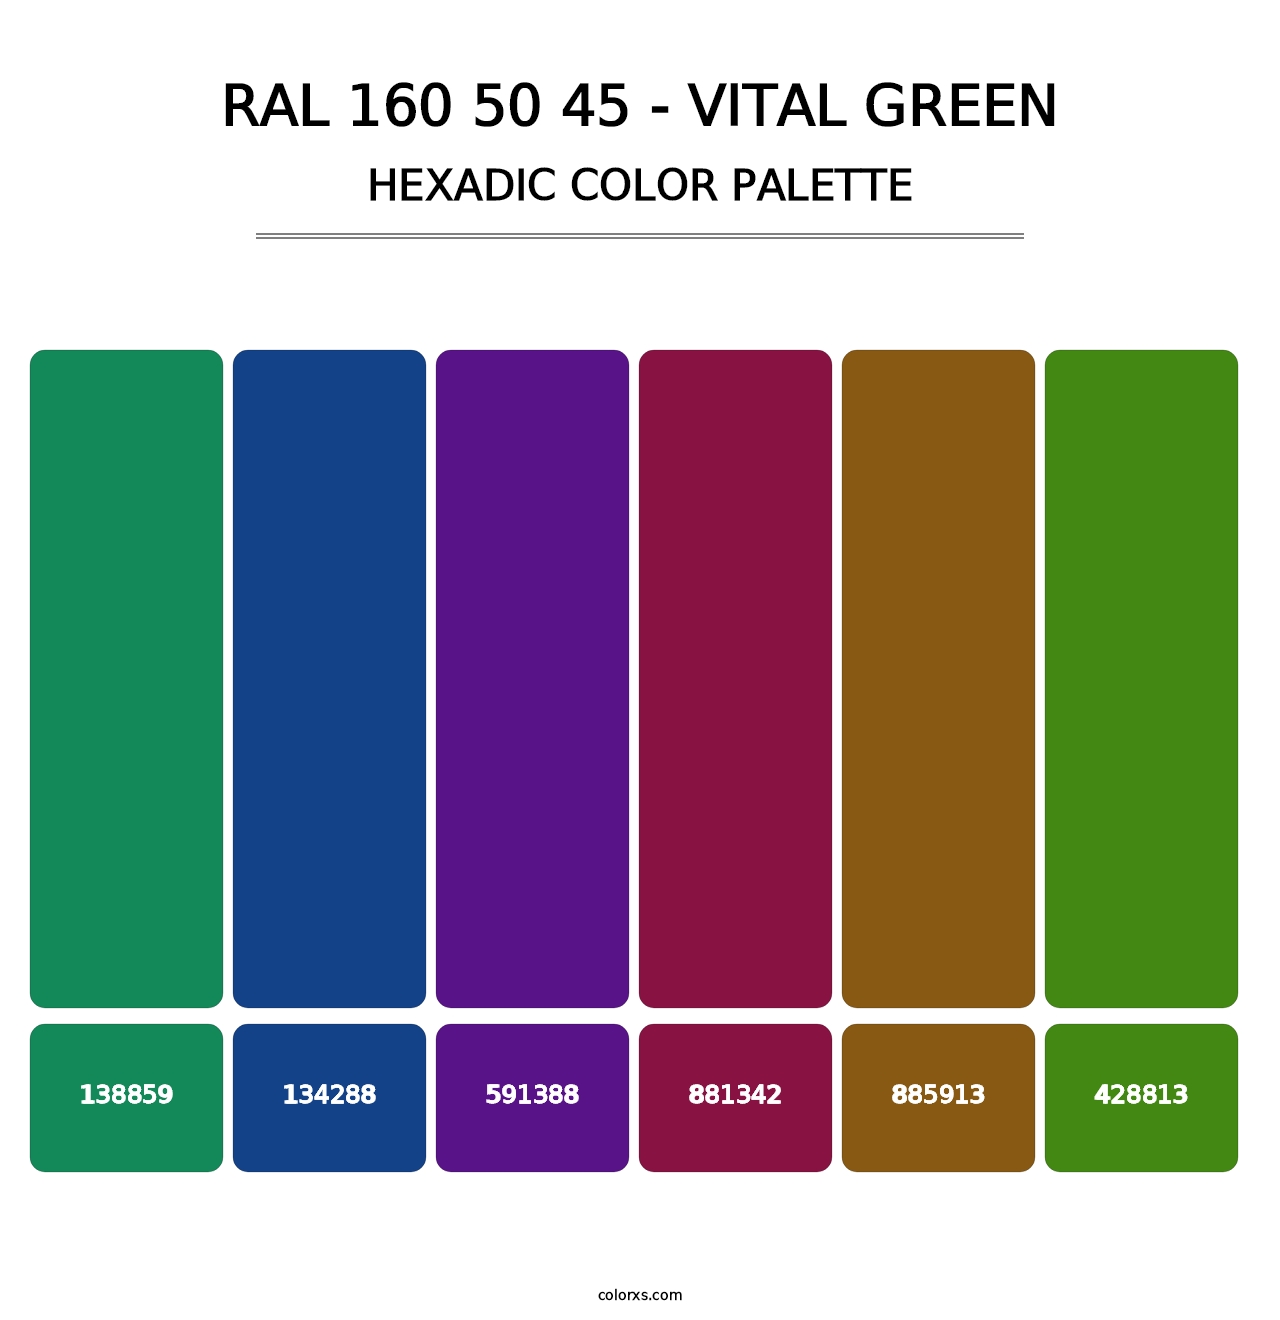 RAL 160 50 45 - Vital Green - Hexadic Color Palette